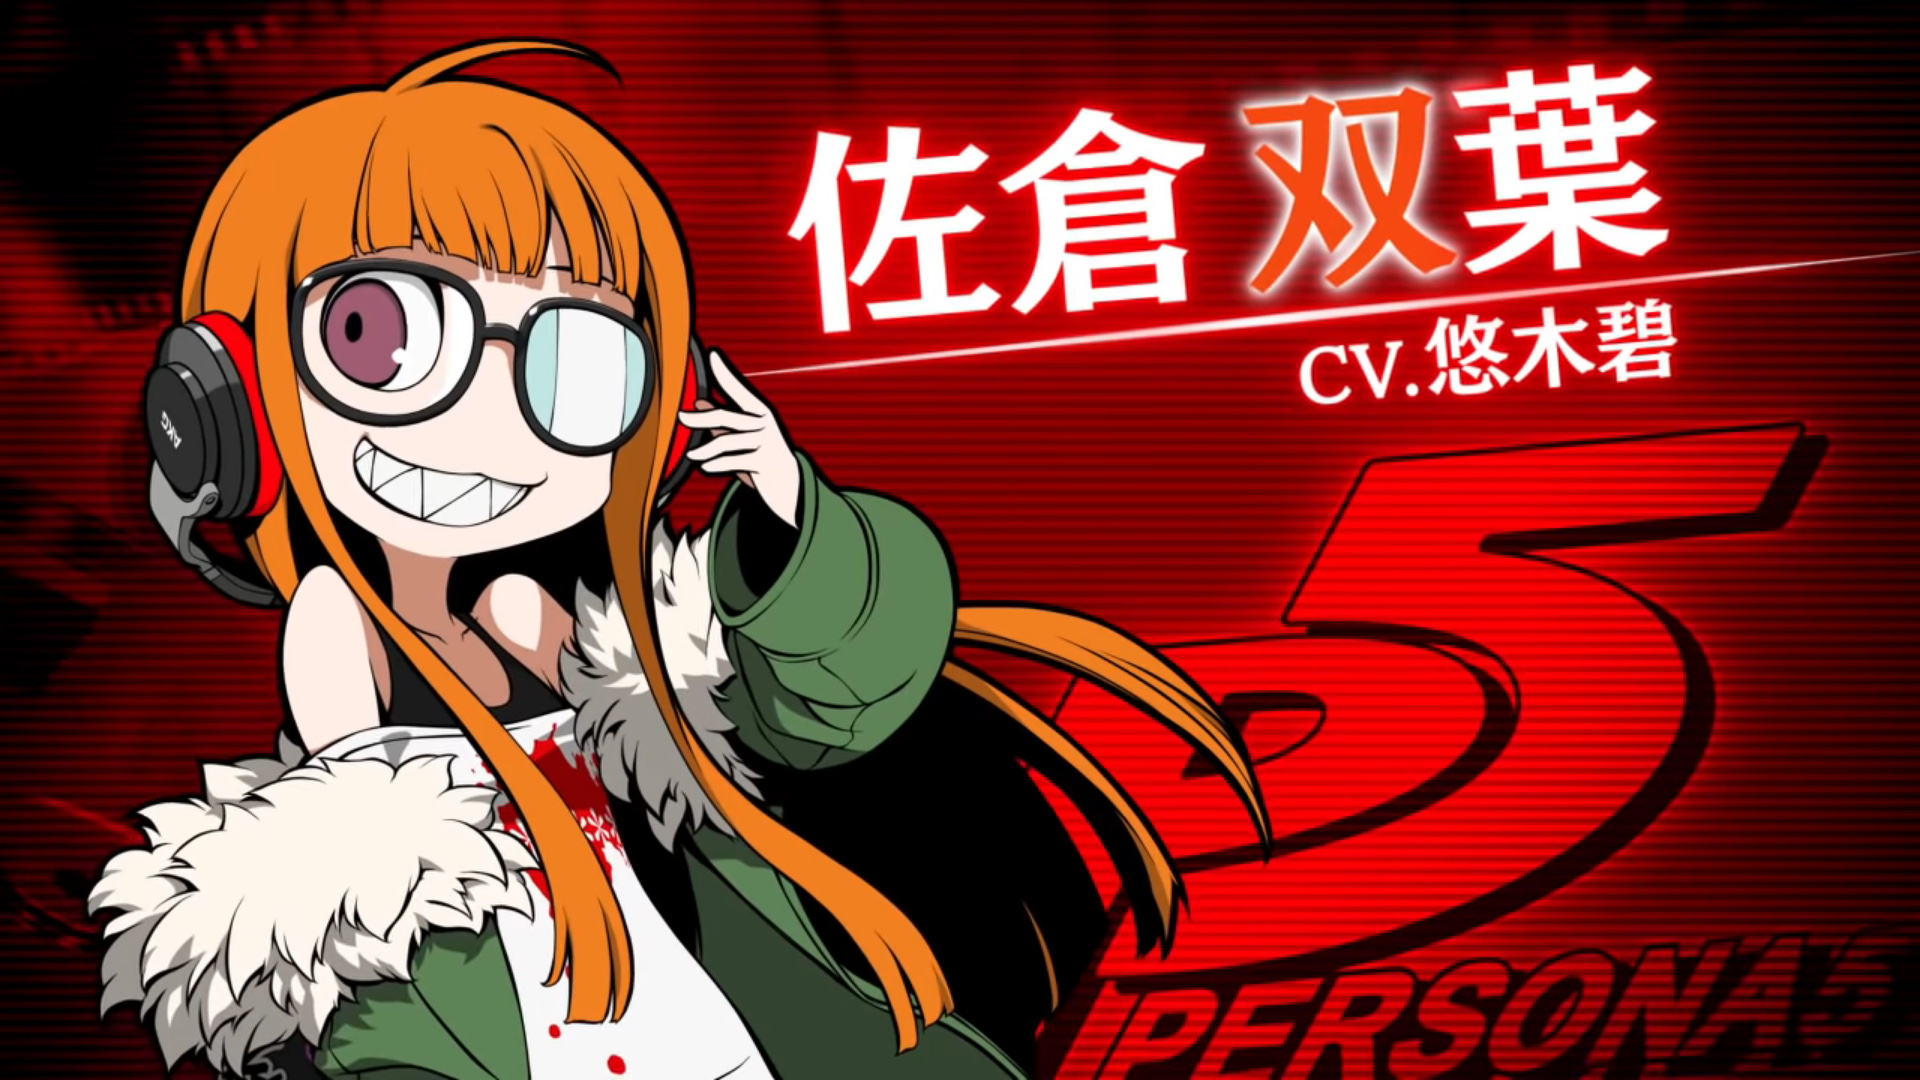 Persona Q2 S Latest Character Trailer Focuses On The Oracle Futaba Sakura Nintendo Wire